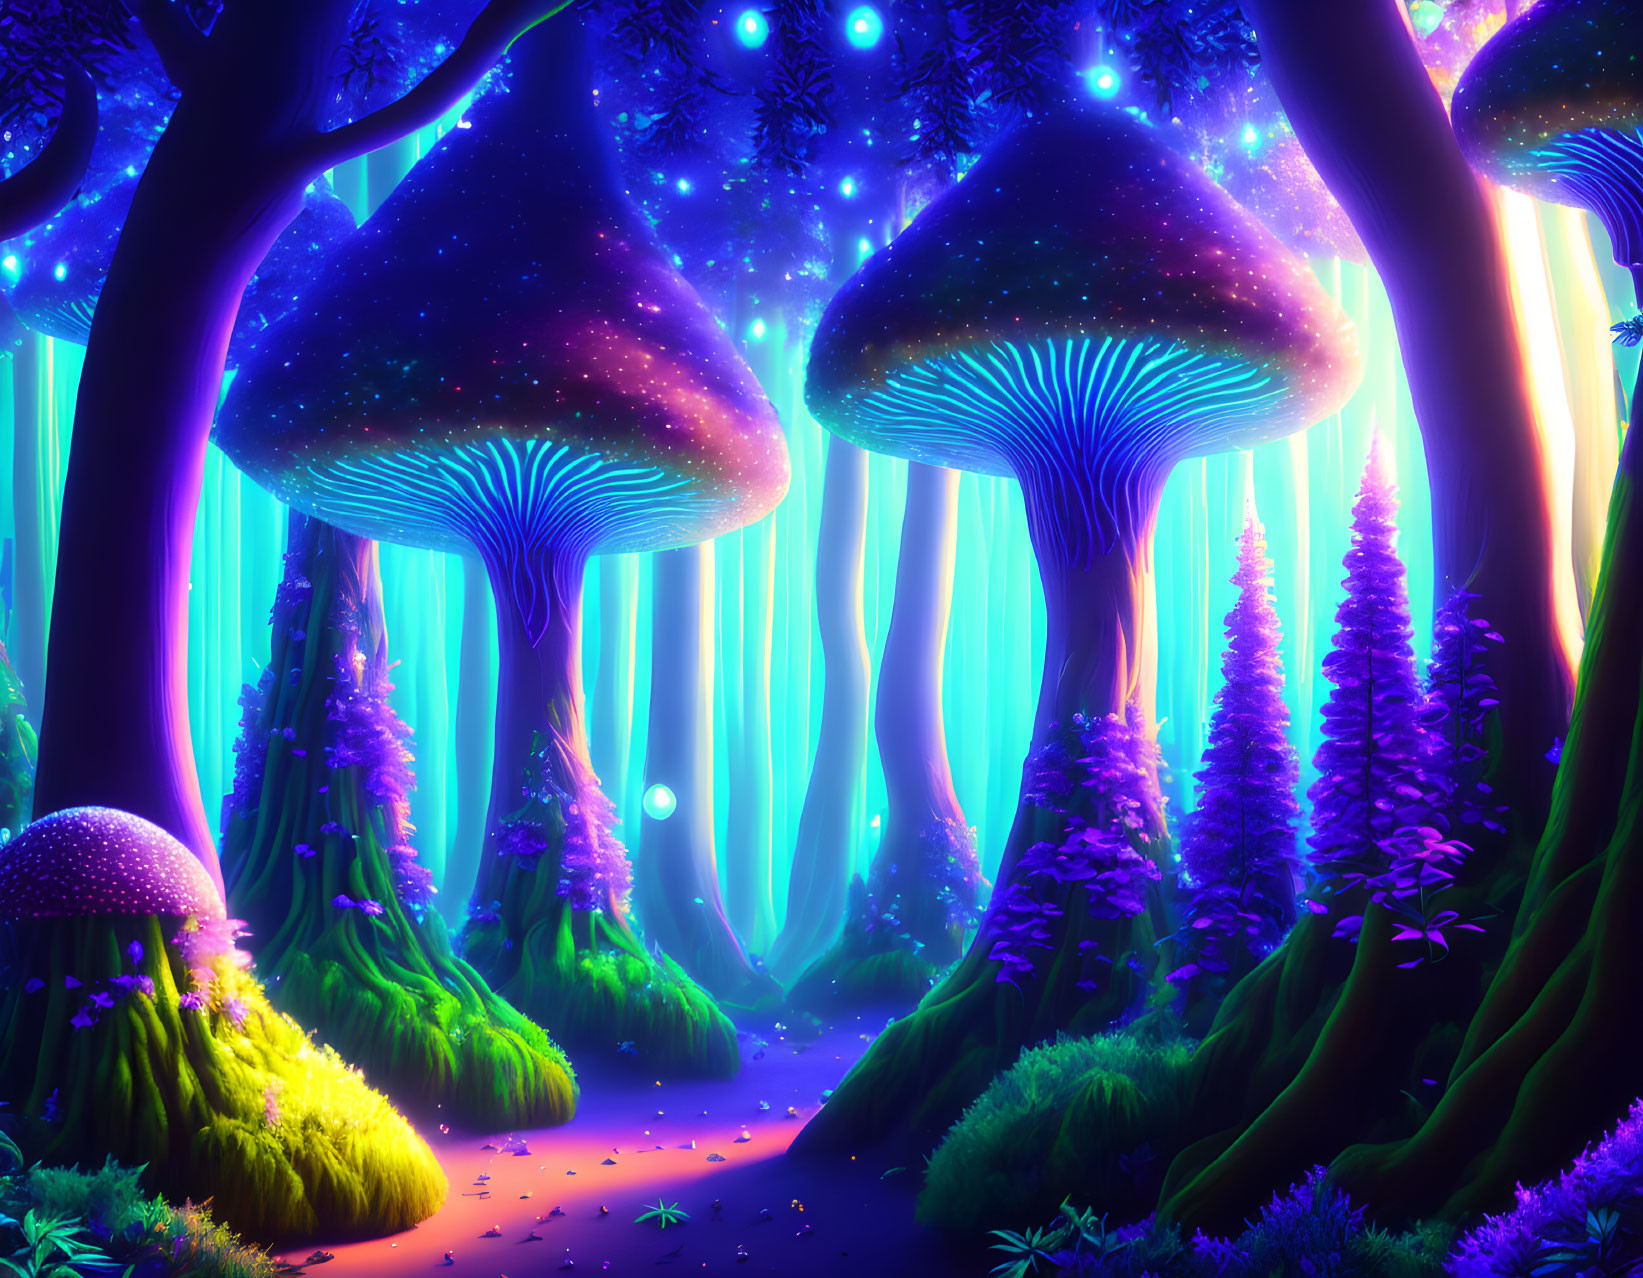 Mushroom Forest 